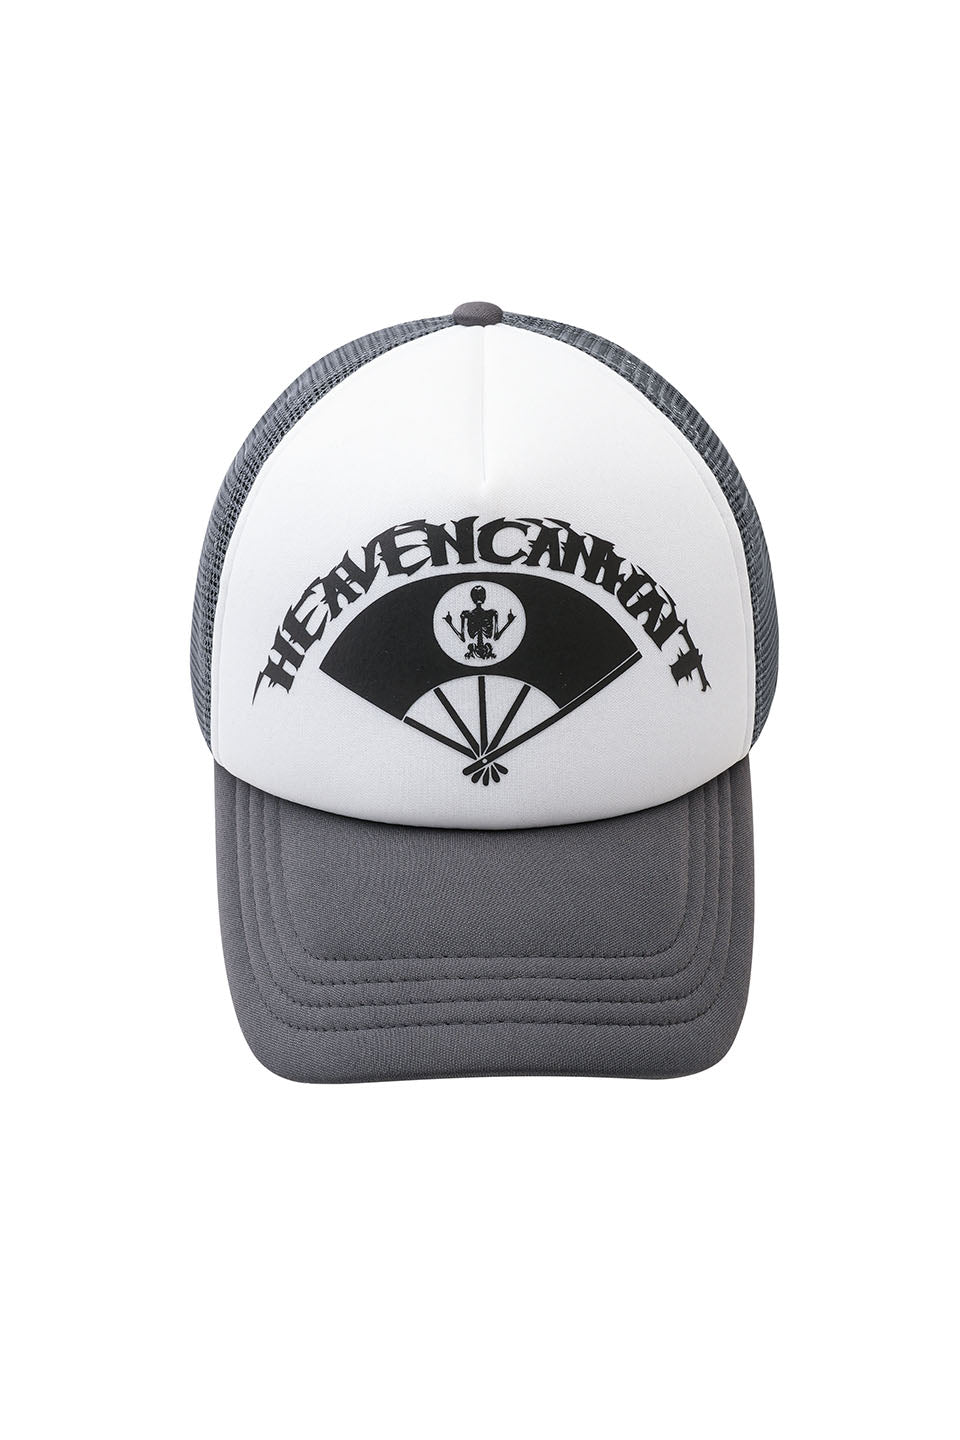 Bassdash Unisex Baseball Trucker Cap Mesh Back Adjustable Fishing Hat